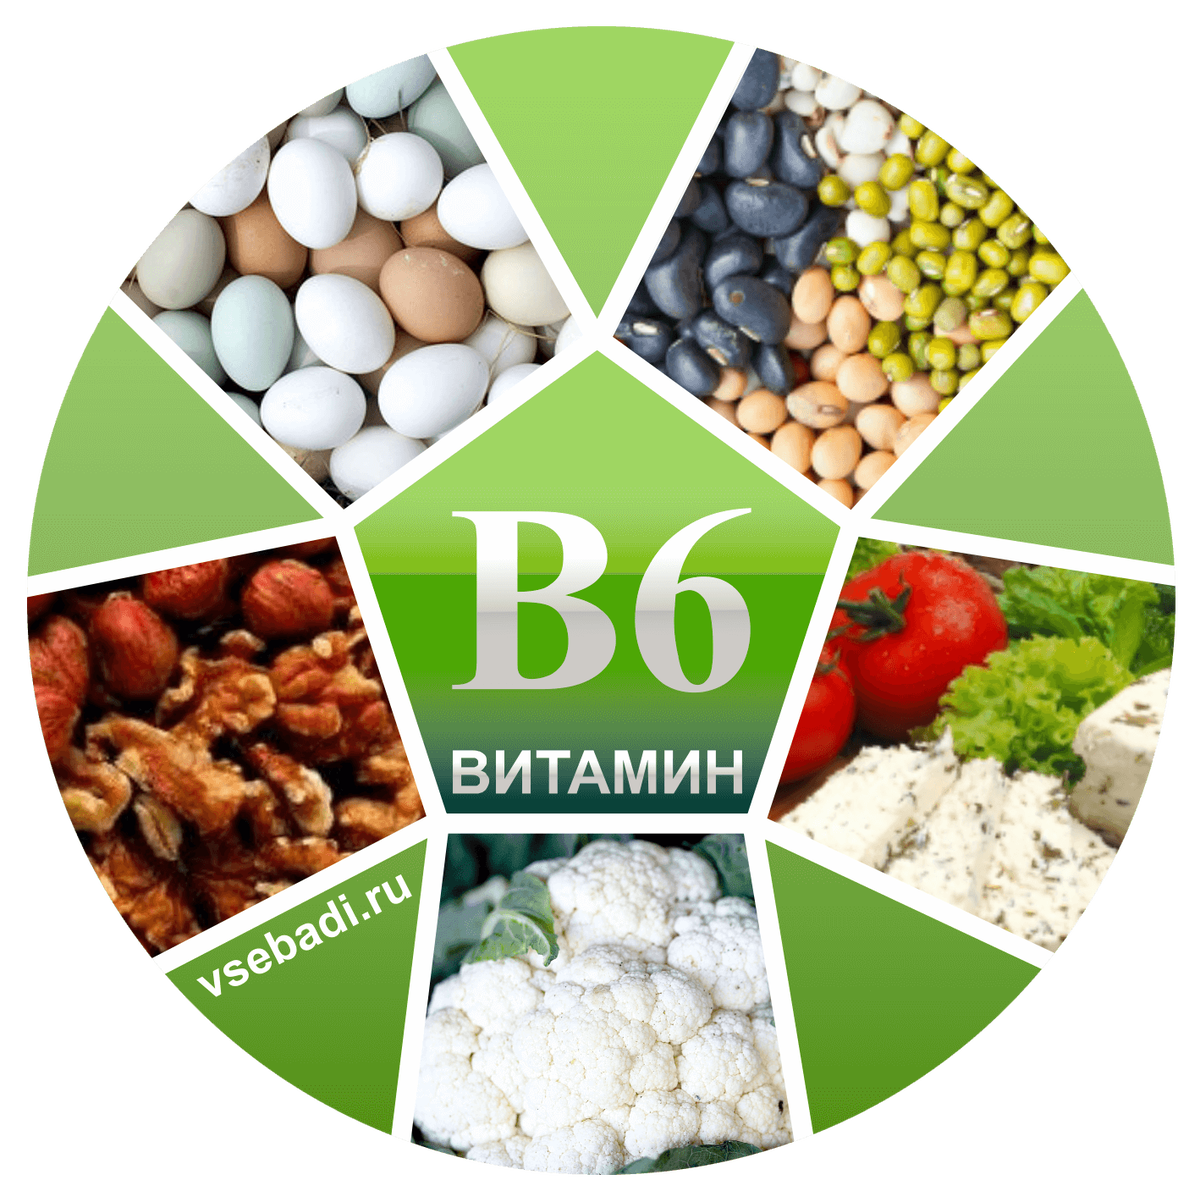 B6 пиридоксин. Витамины группы b6. Витамин b6 название витамина. Витамин b6 источники витамина. Витамин b6 пиридоксин.